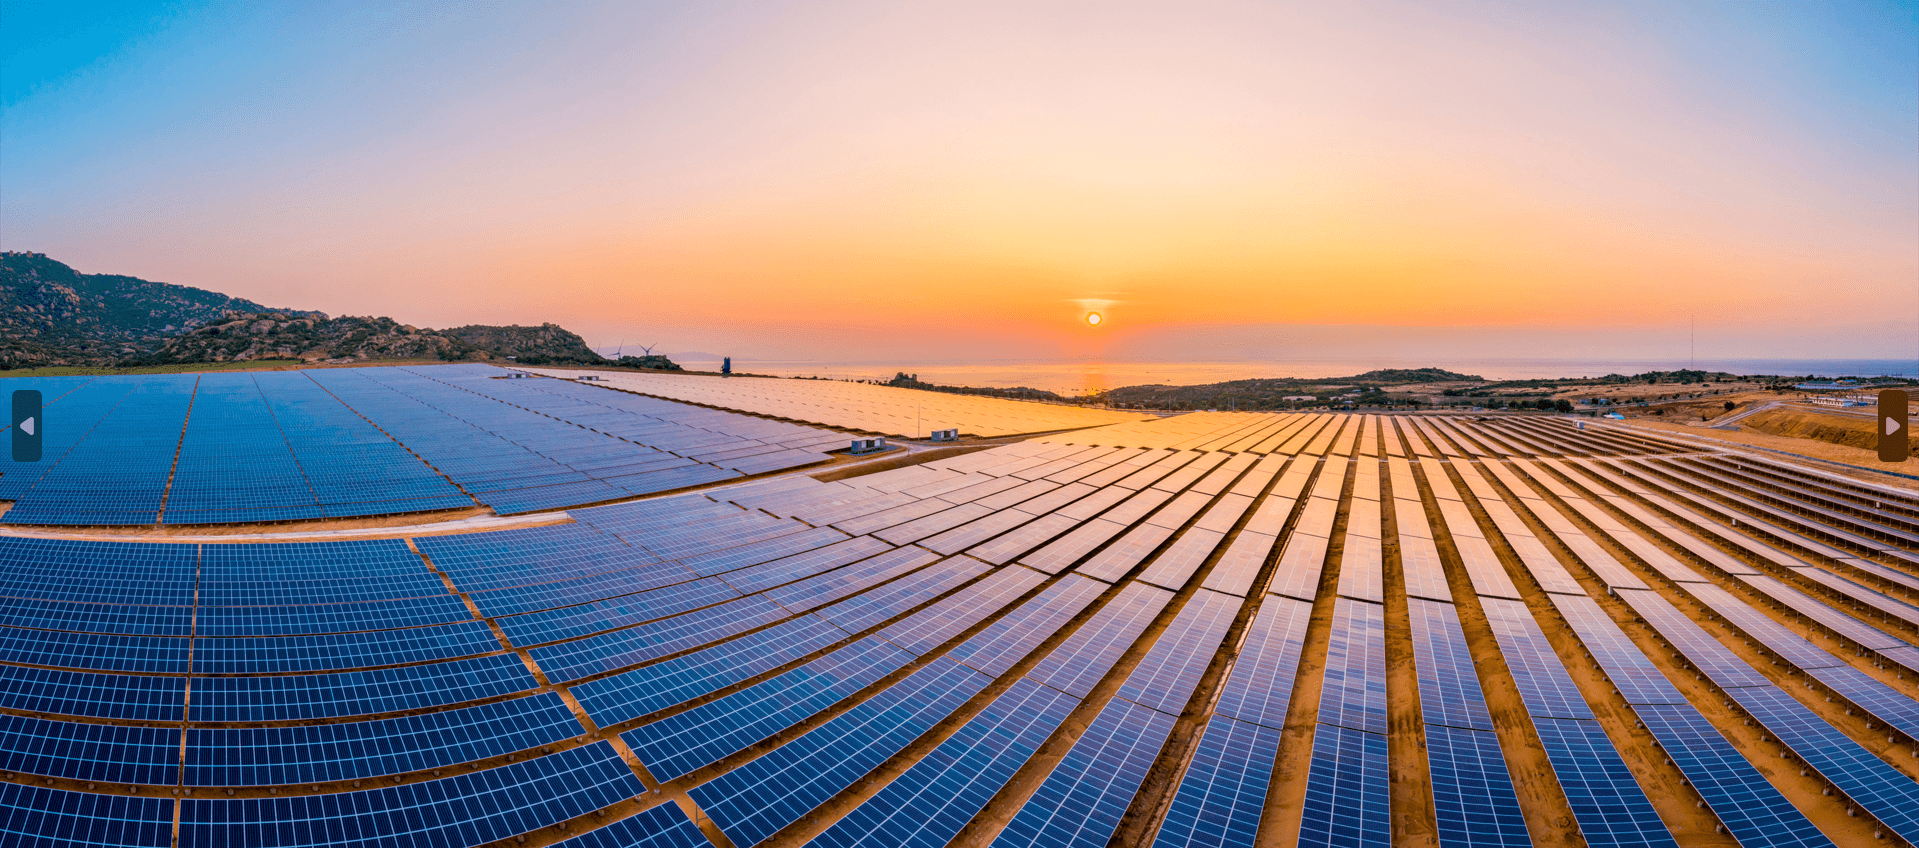 New TKDN regulation for solar project